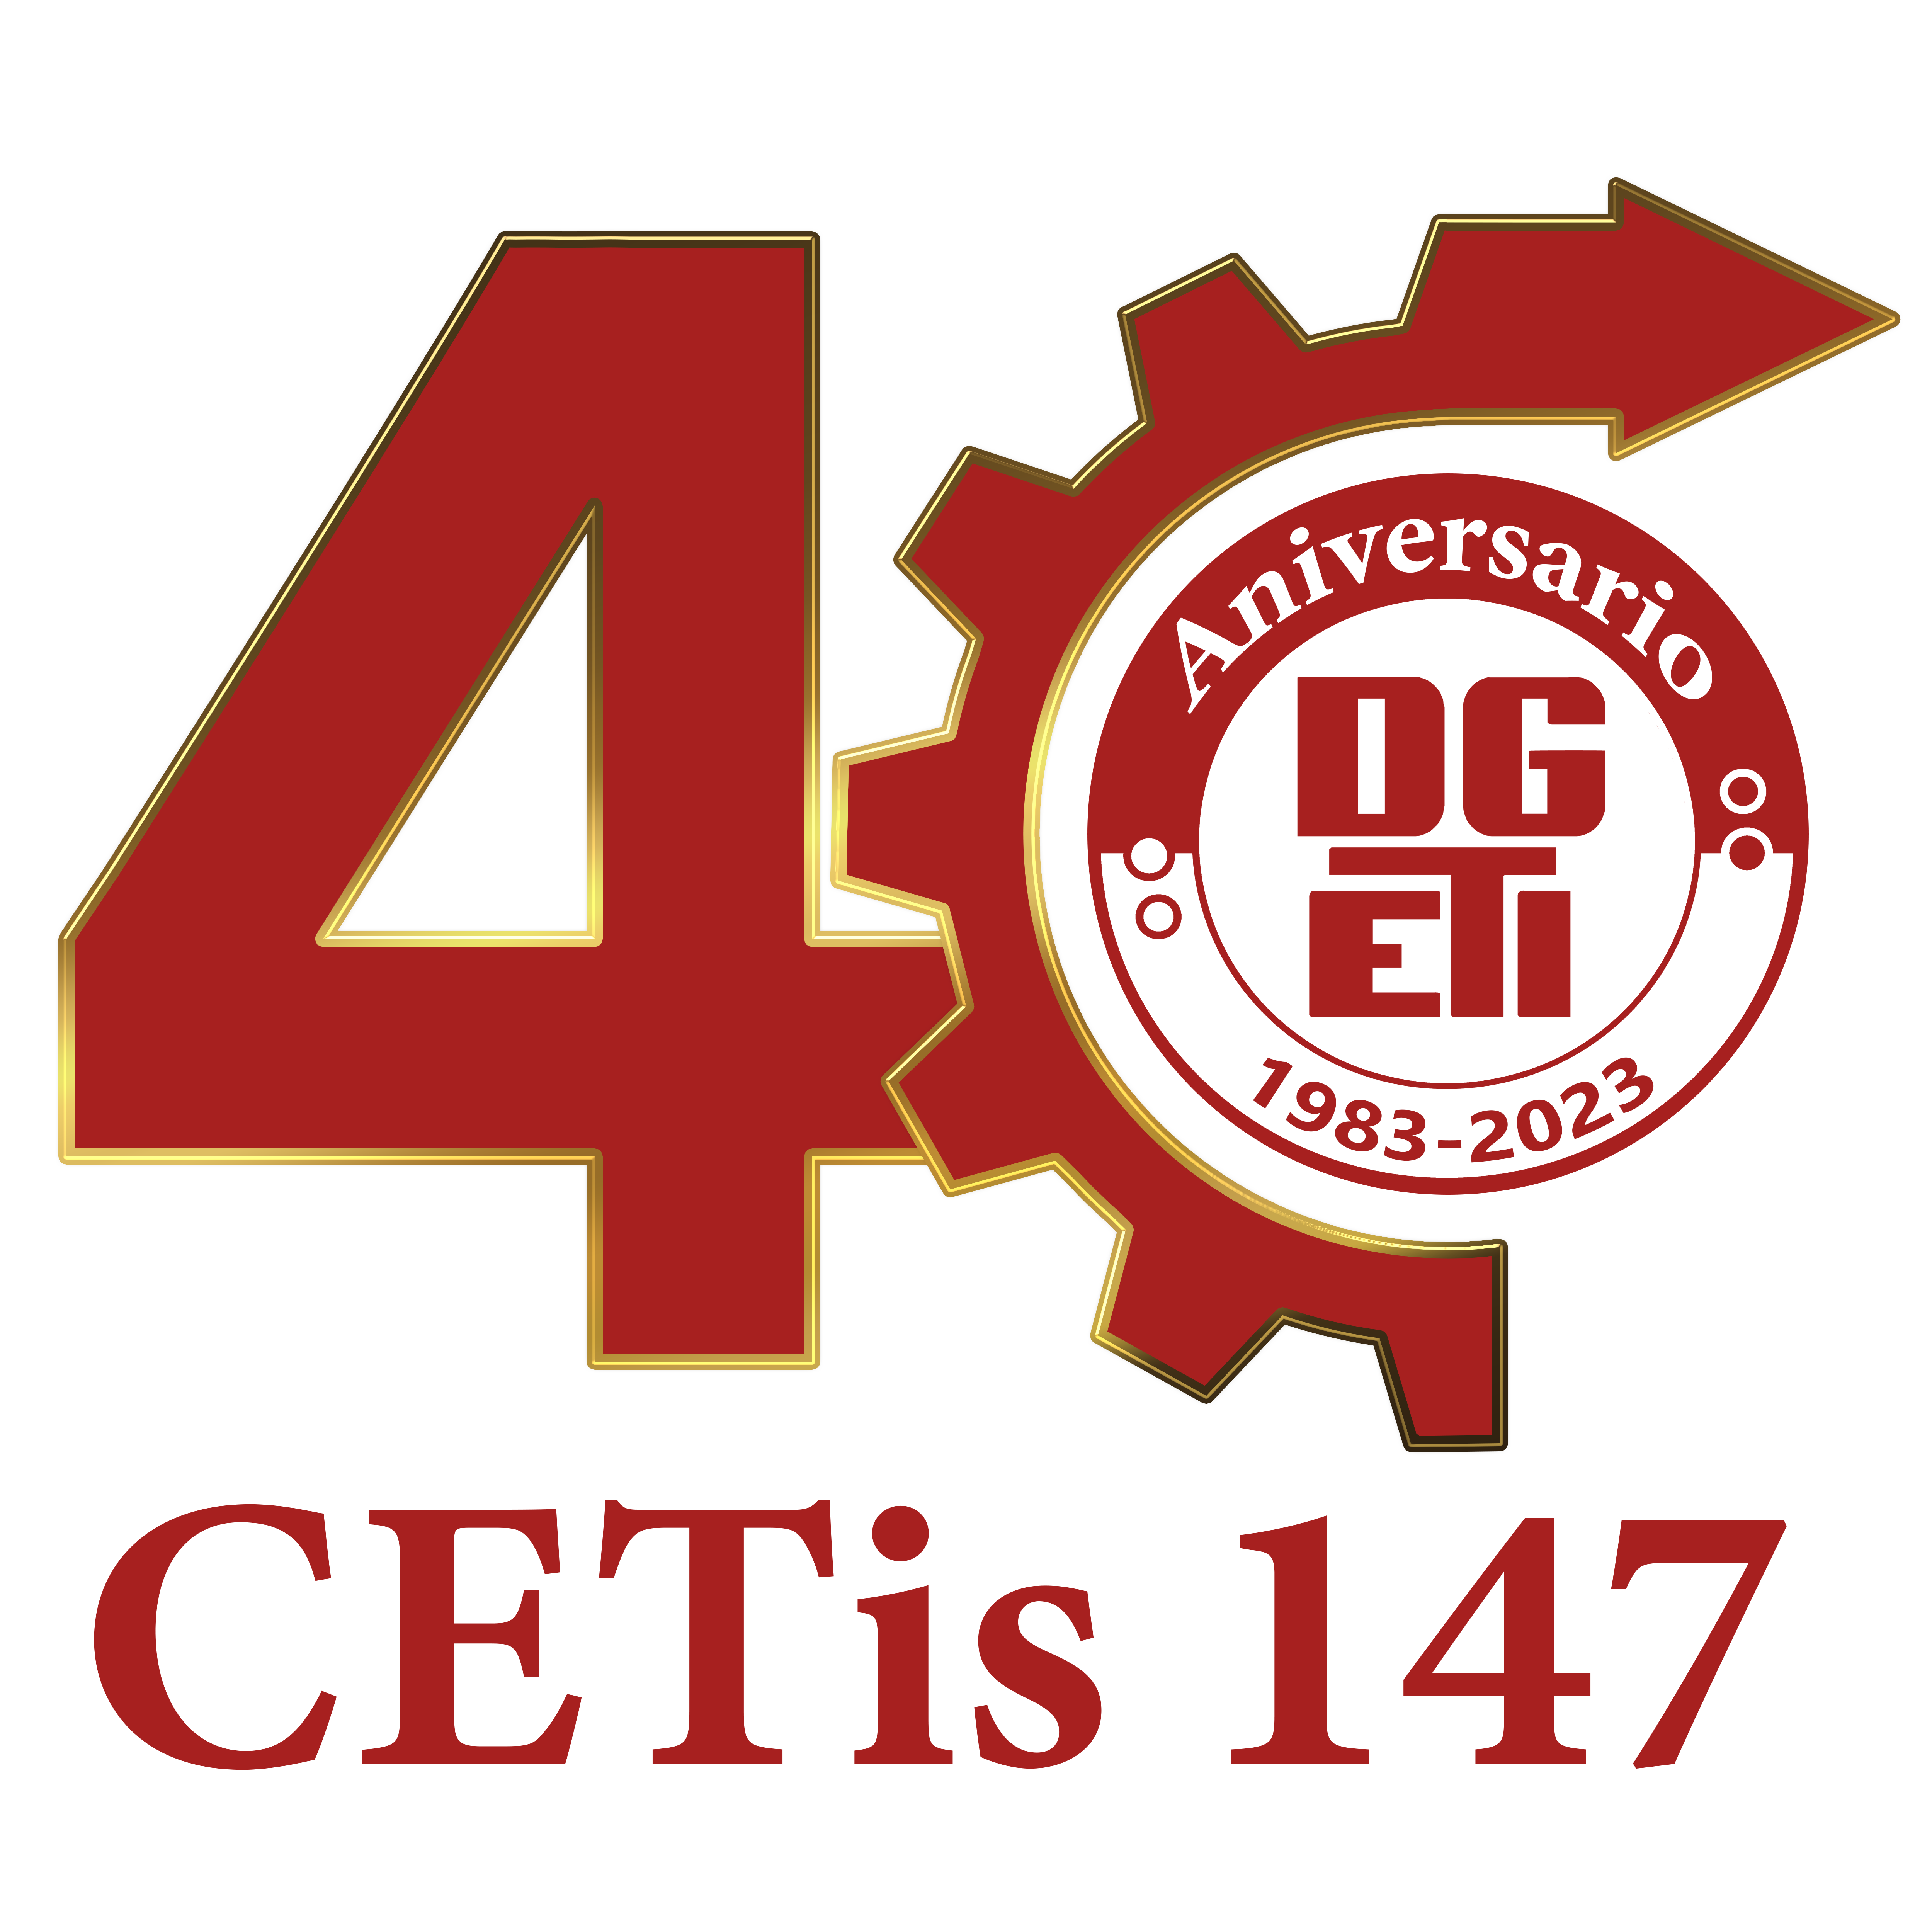 CETis 147